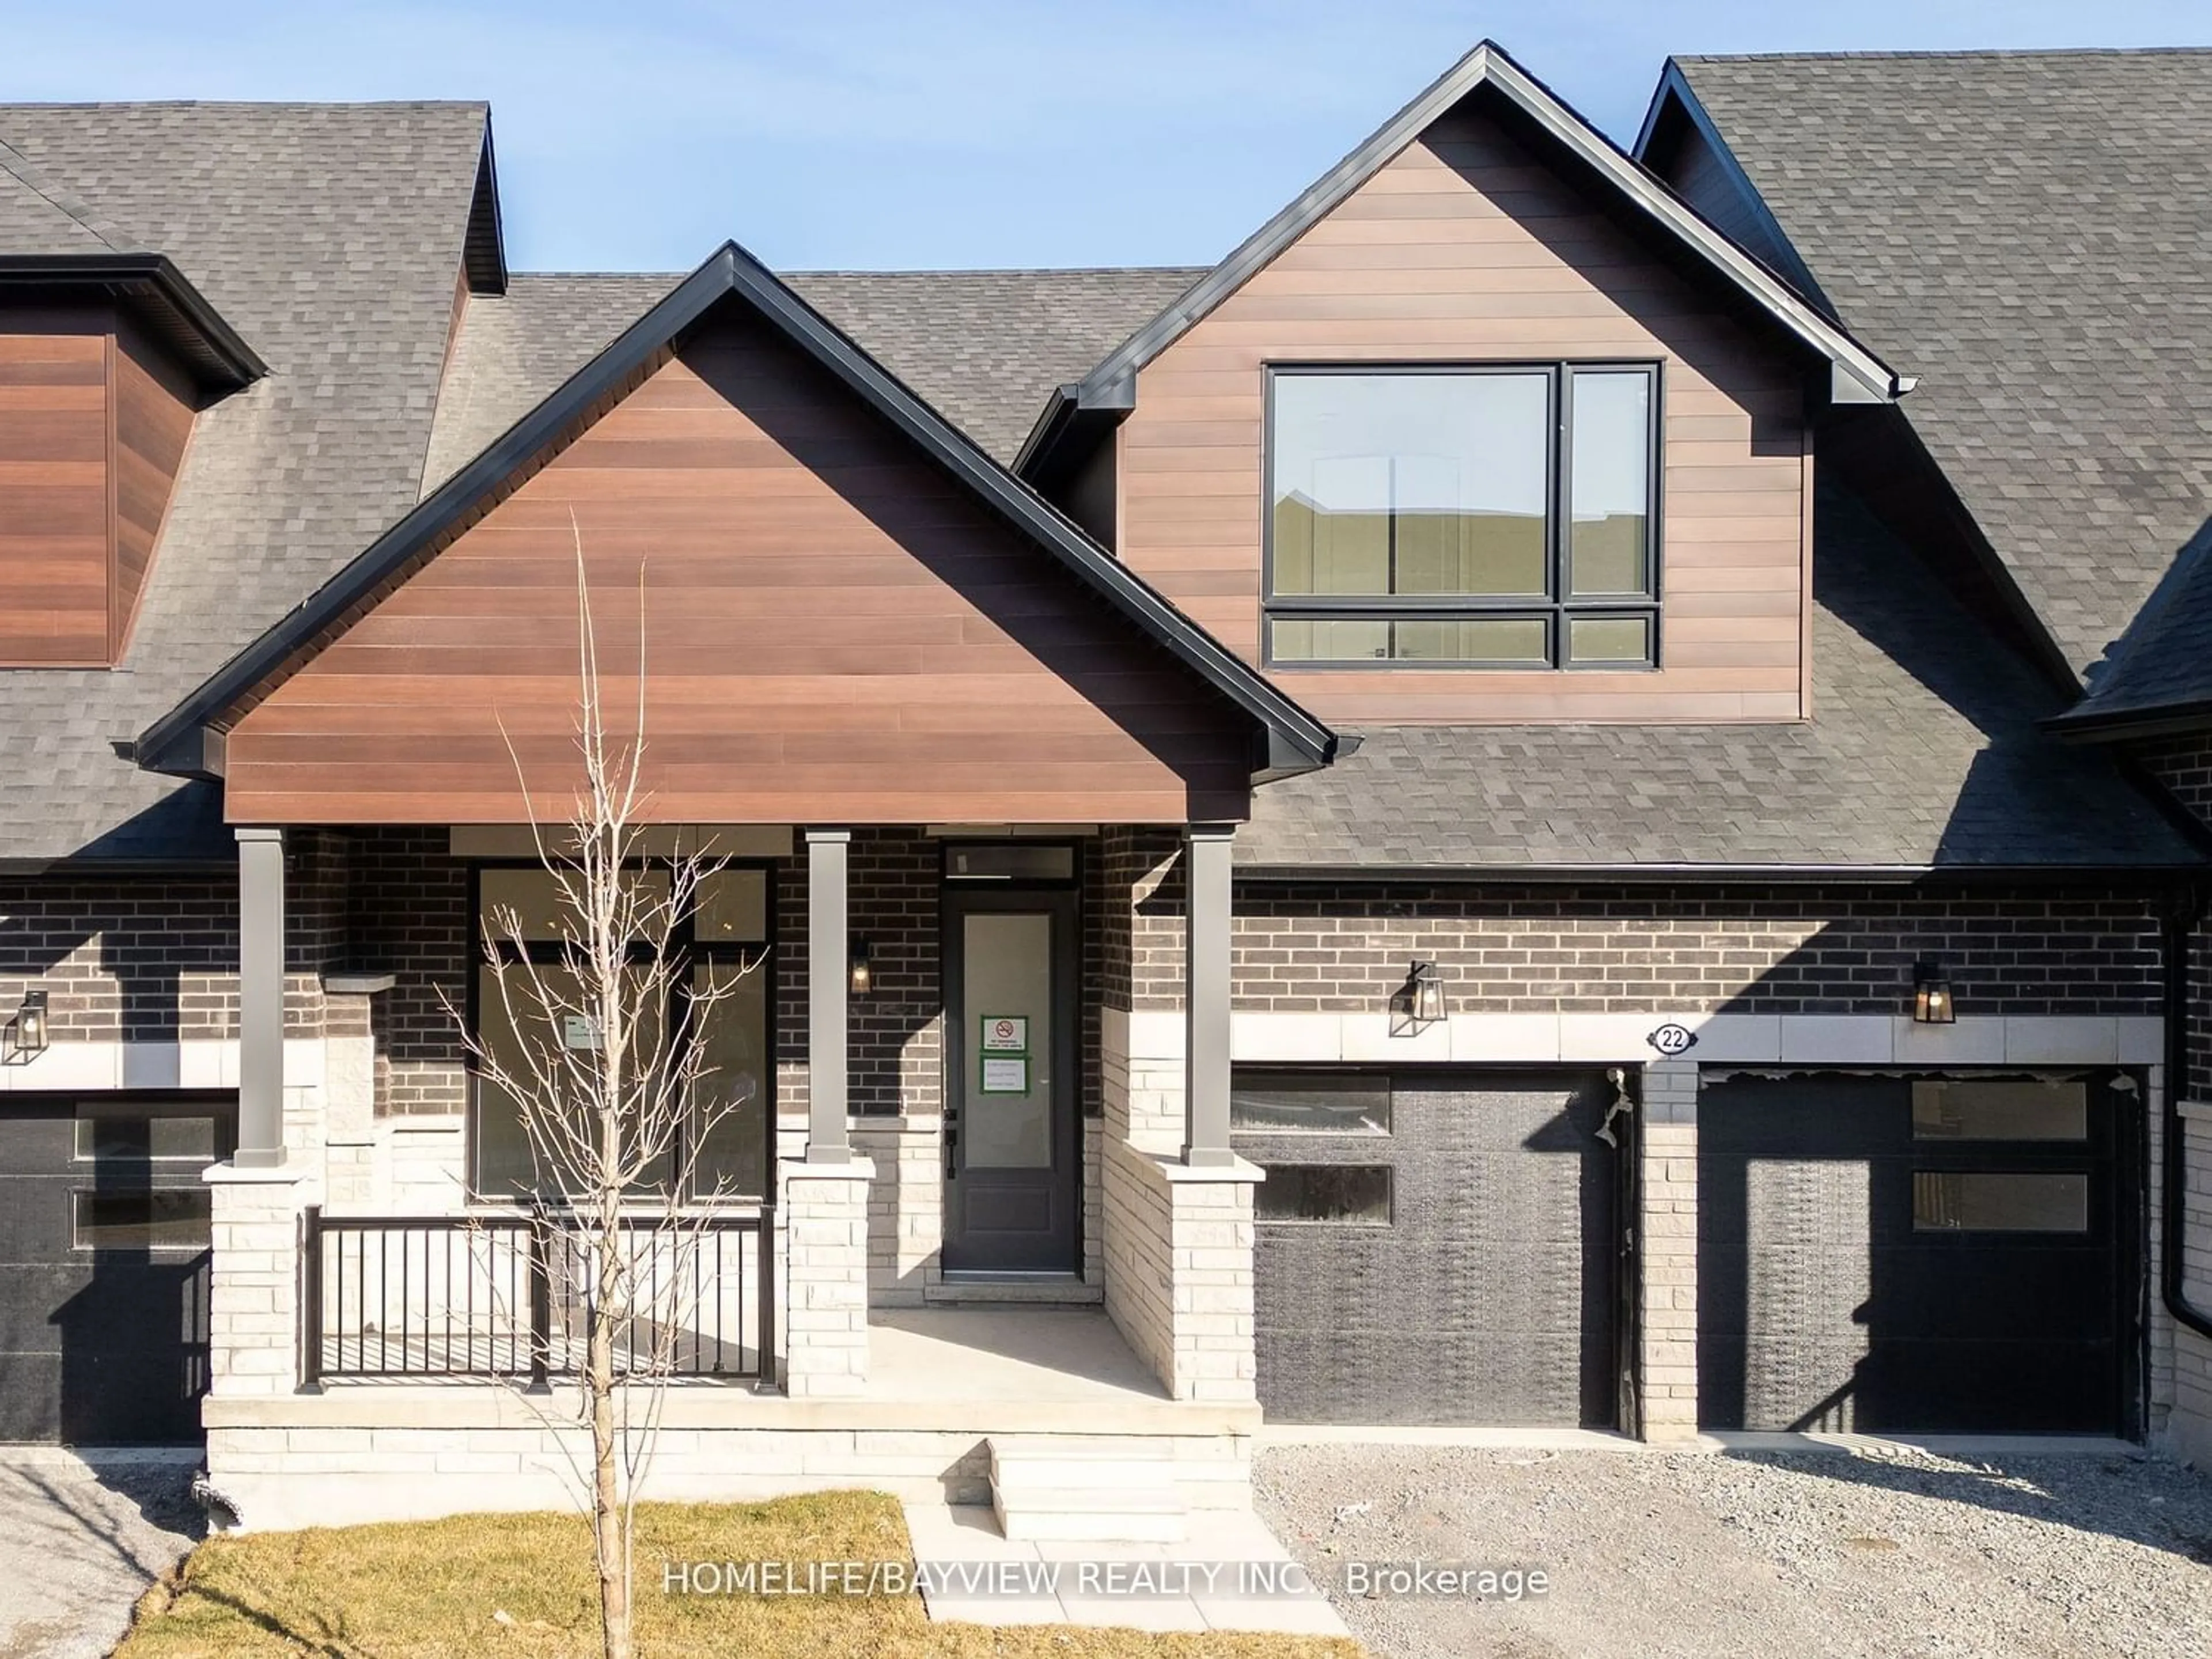 Home with brick exterior material for 22 David Worgan Tr, Uxbridge Ontario L9P 0R9